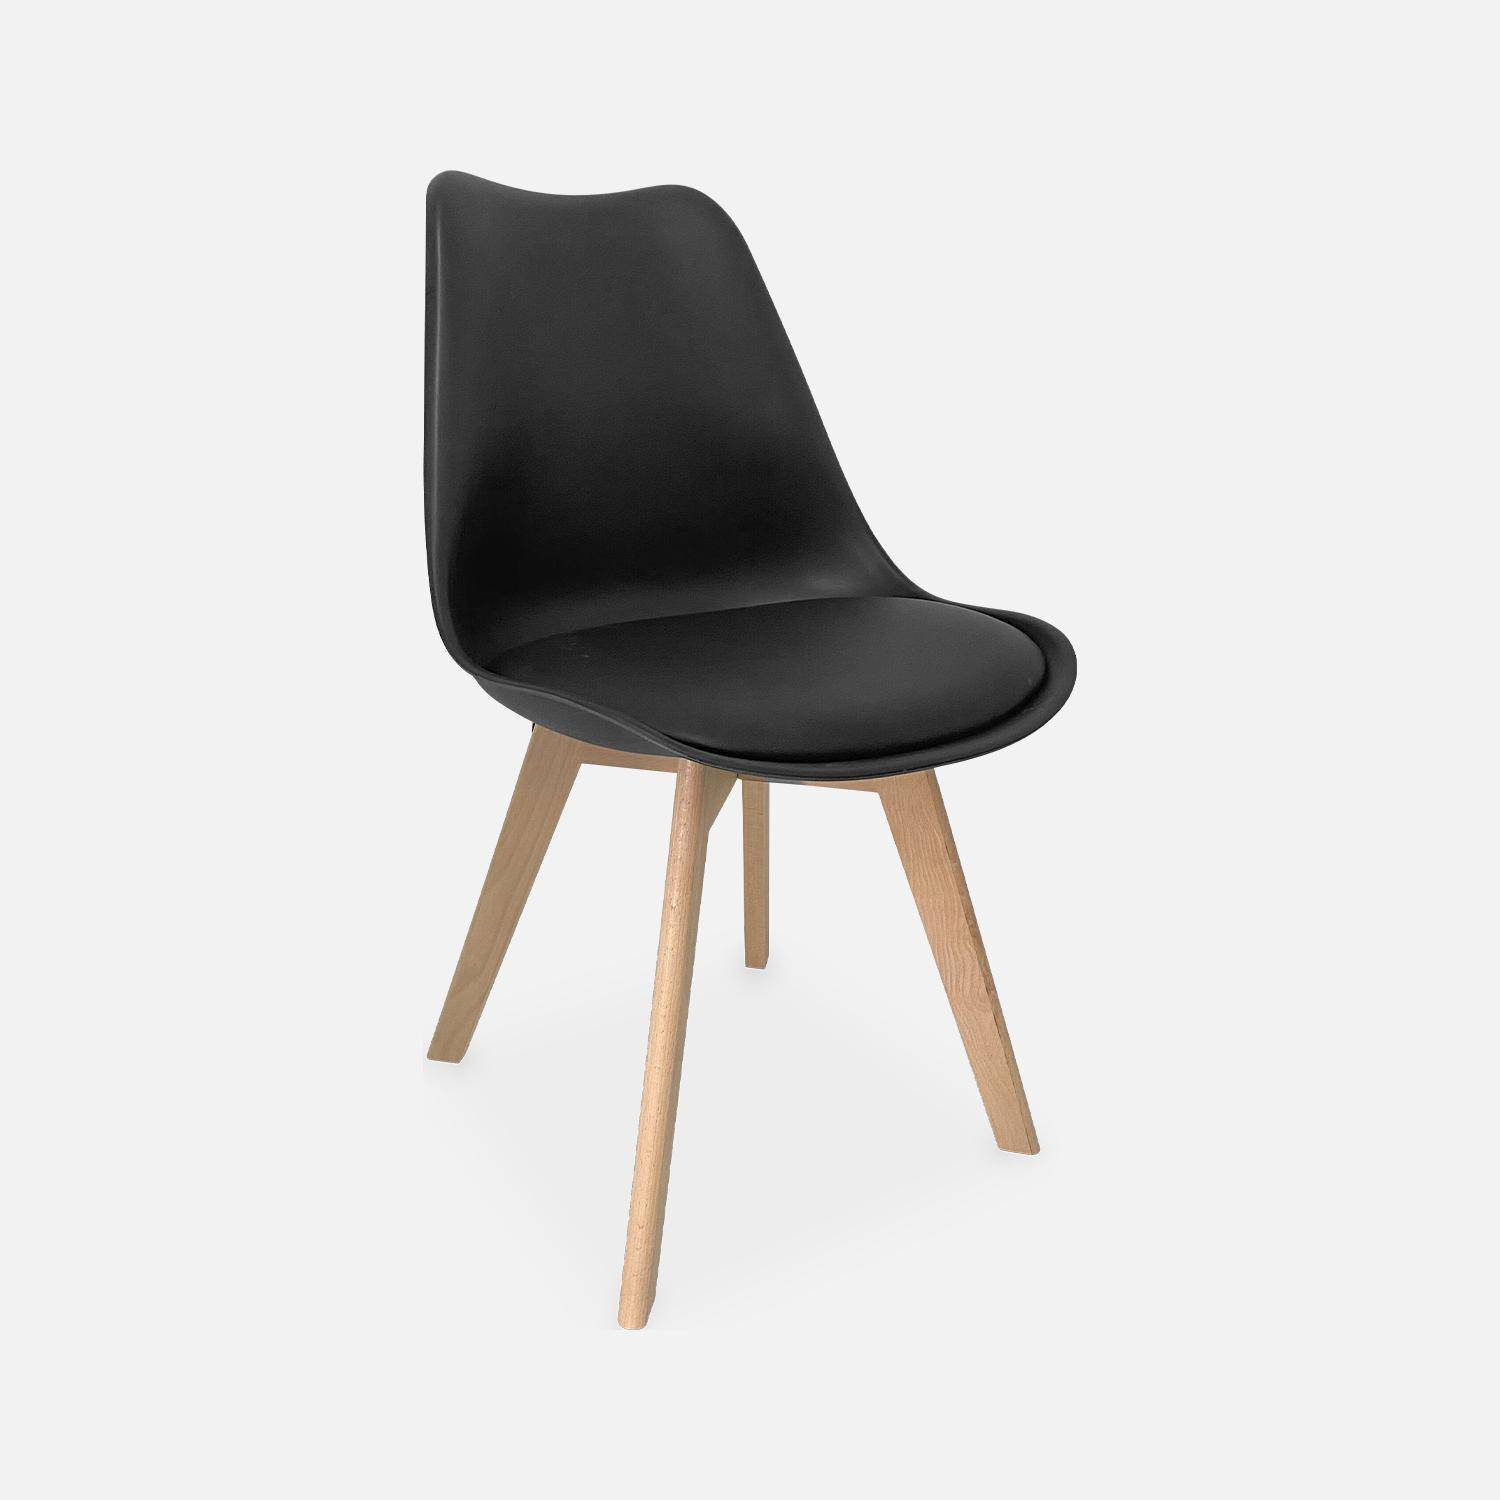 Set of 4 Scandinavian chairs, beechwood legs, 1-seater chair, black,sweeek,Photo5